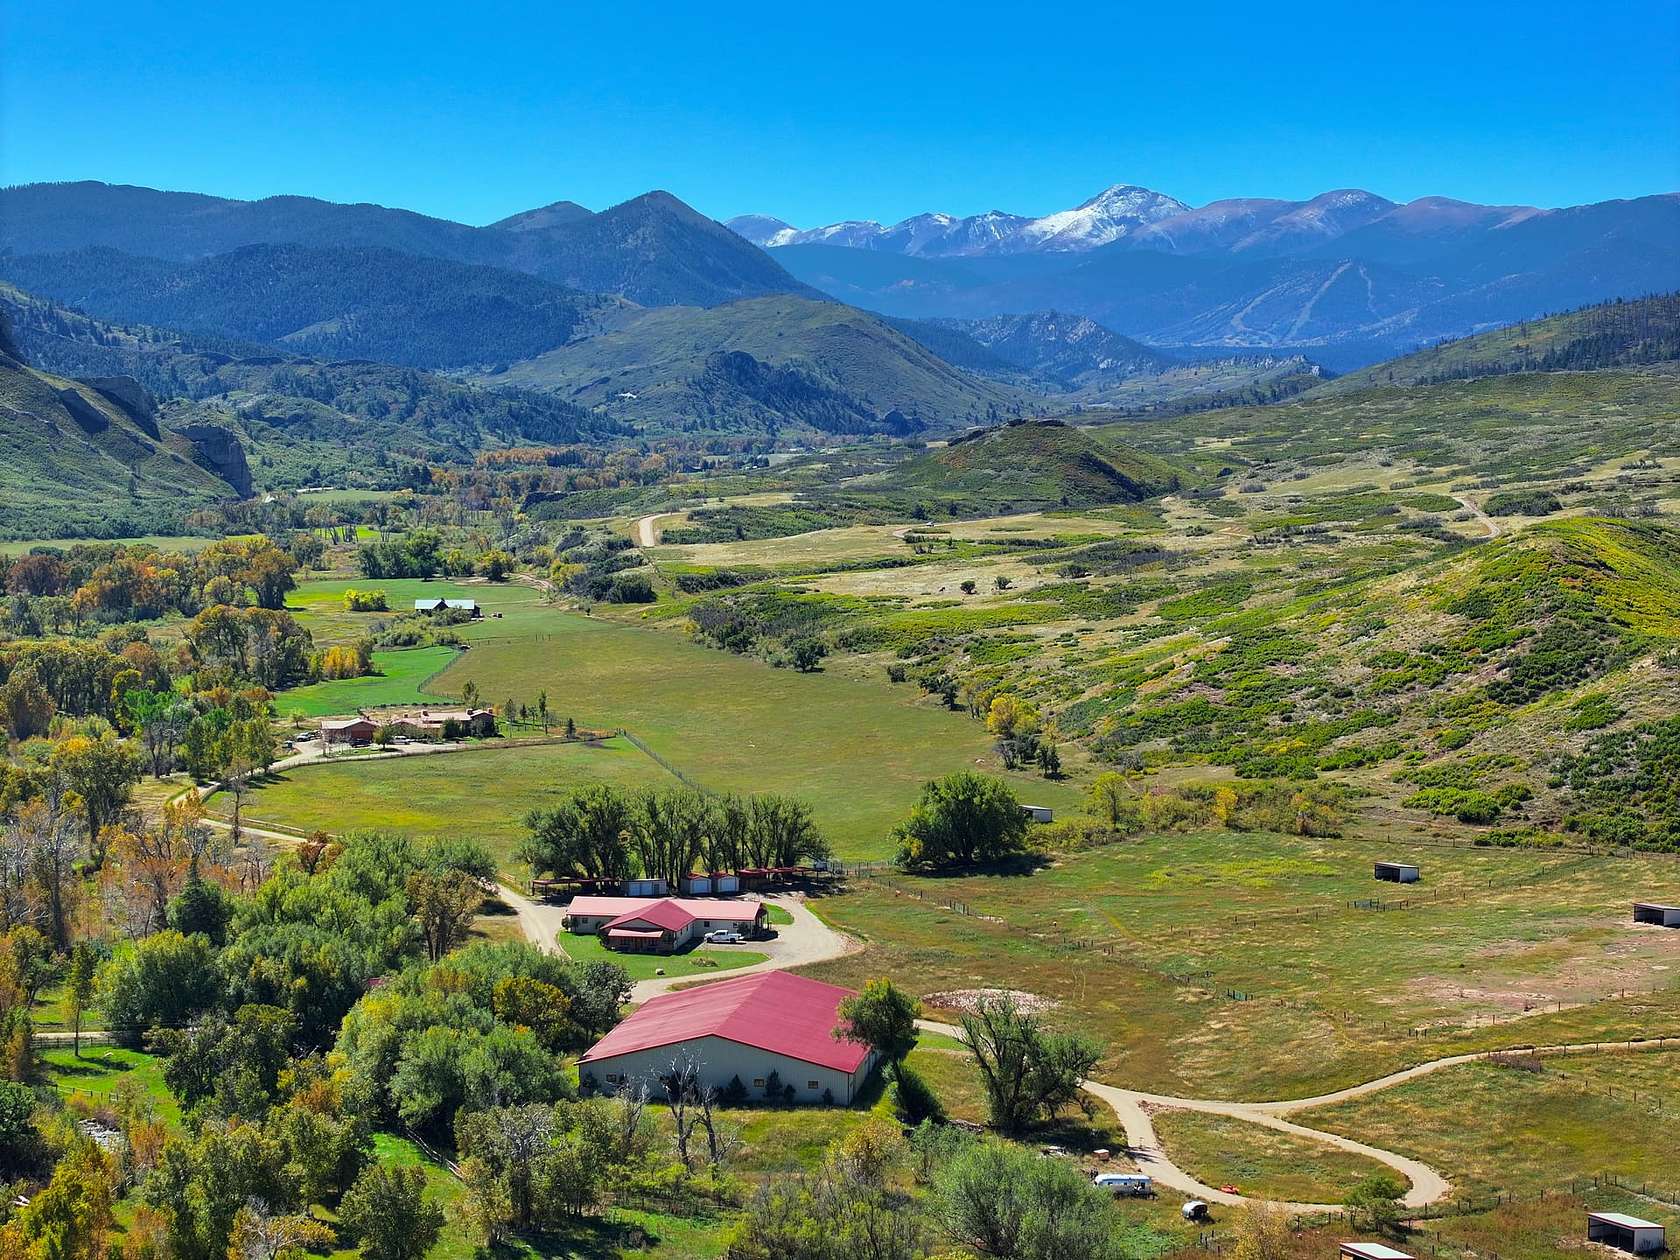 302 Acres of Land with Home for Sale in La Veta, Colorado